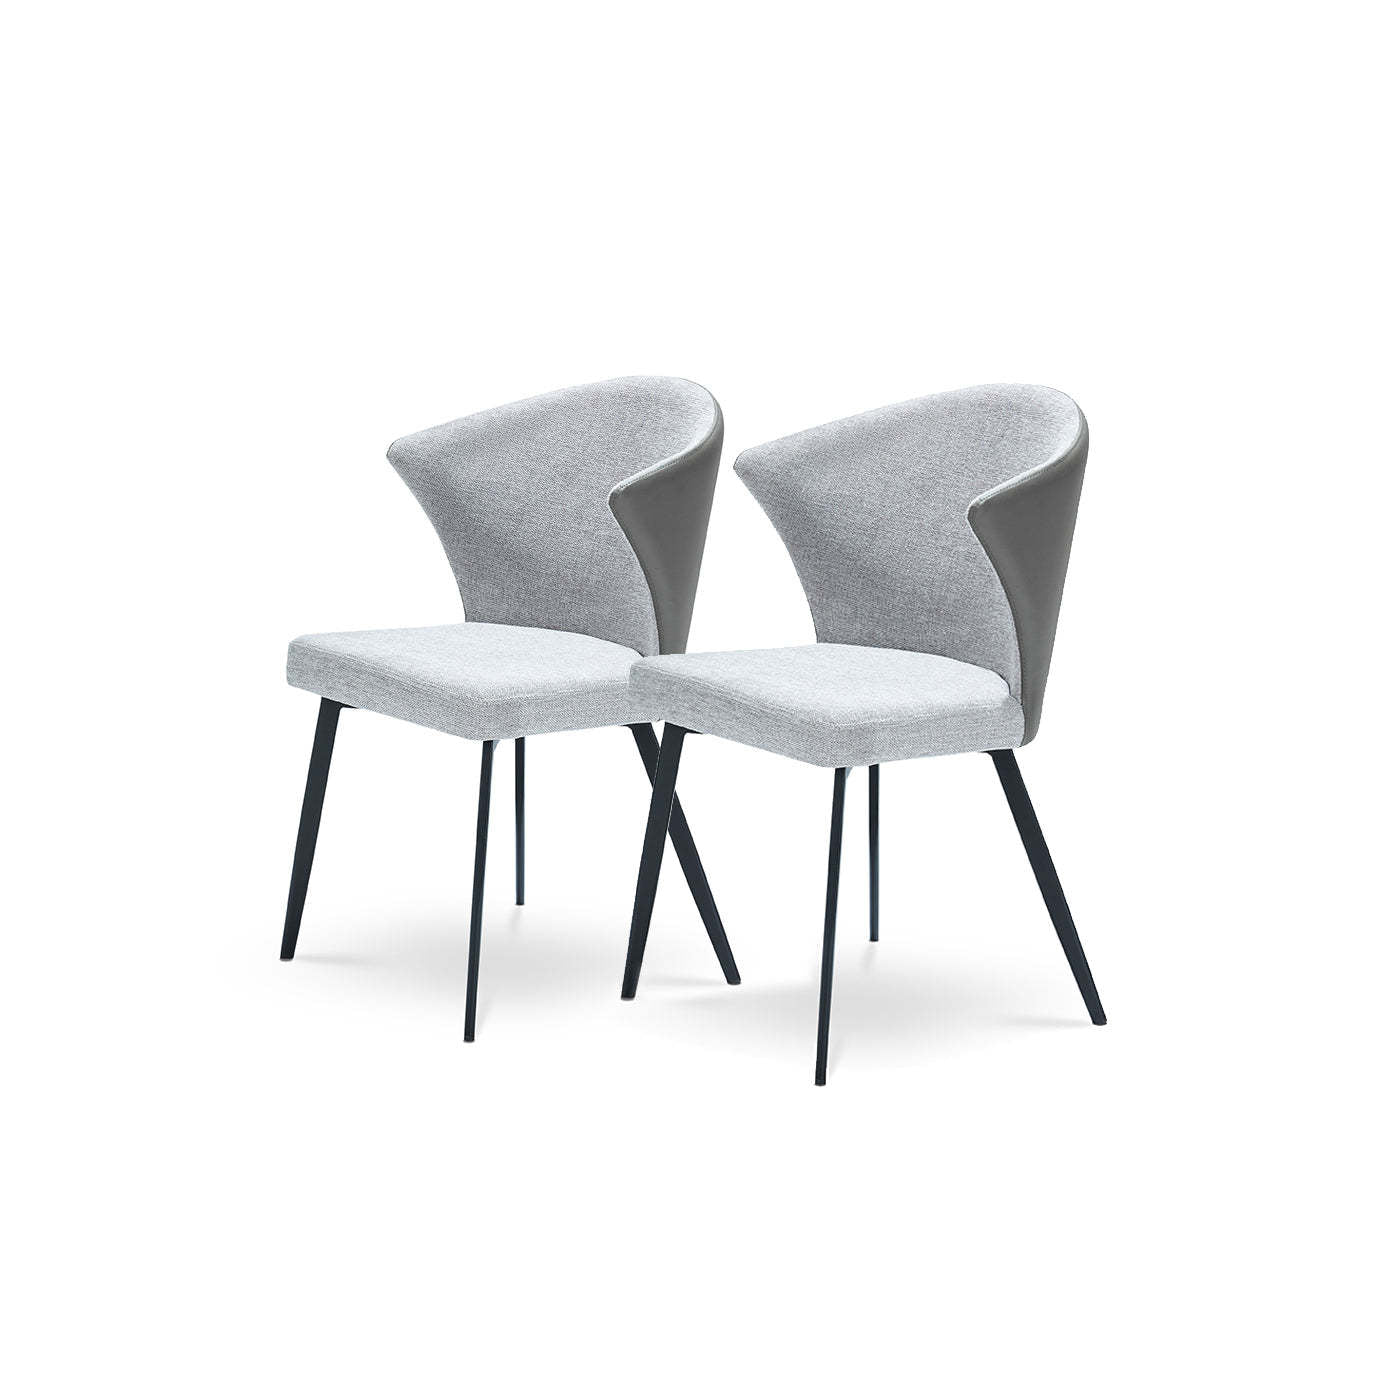 Modern minimalist gray dining chair, carbon steel